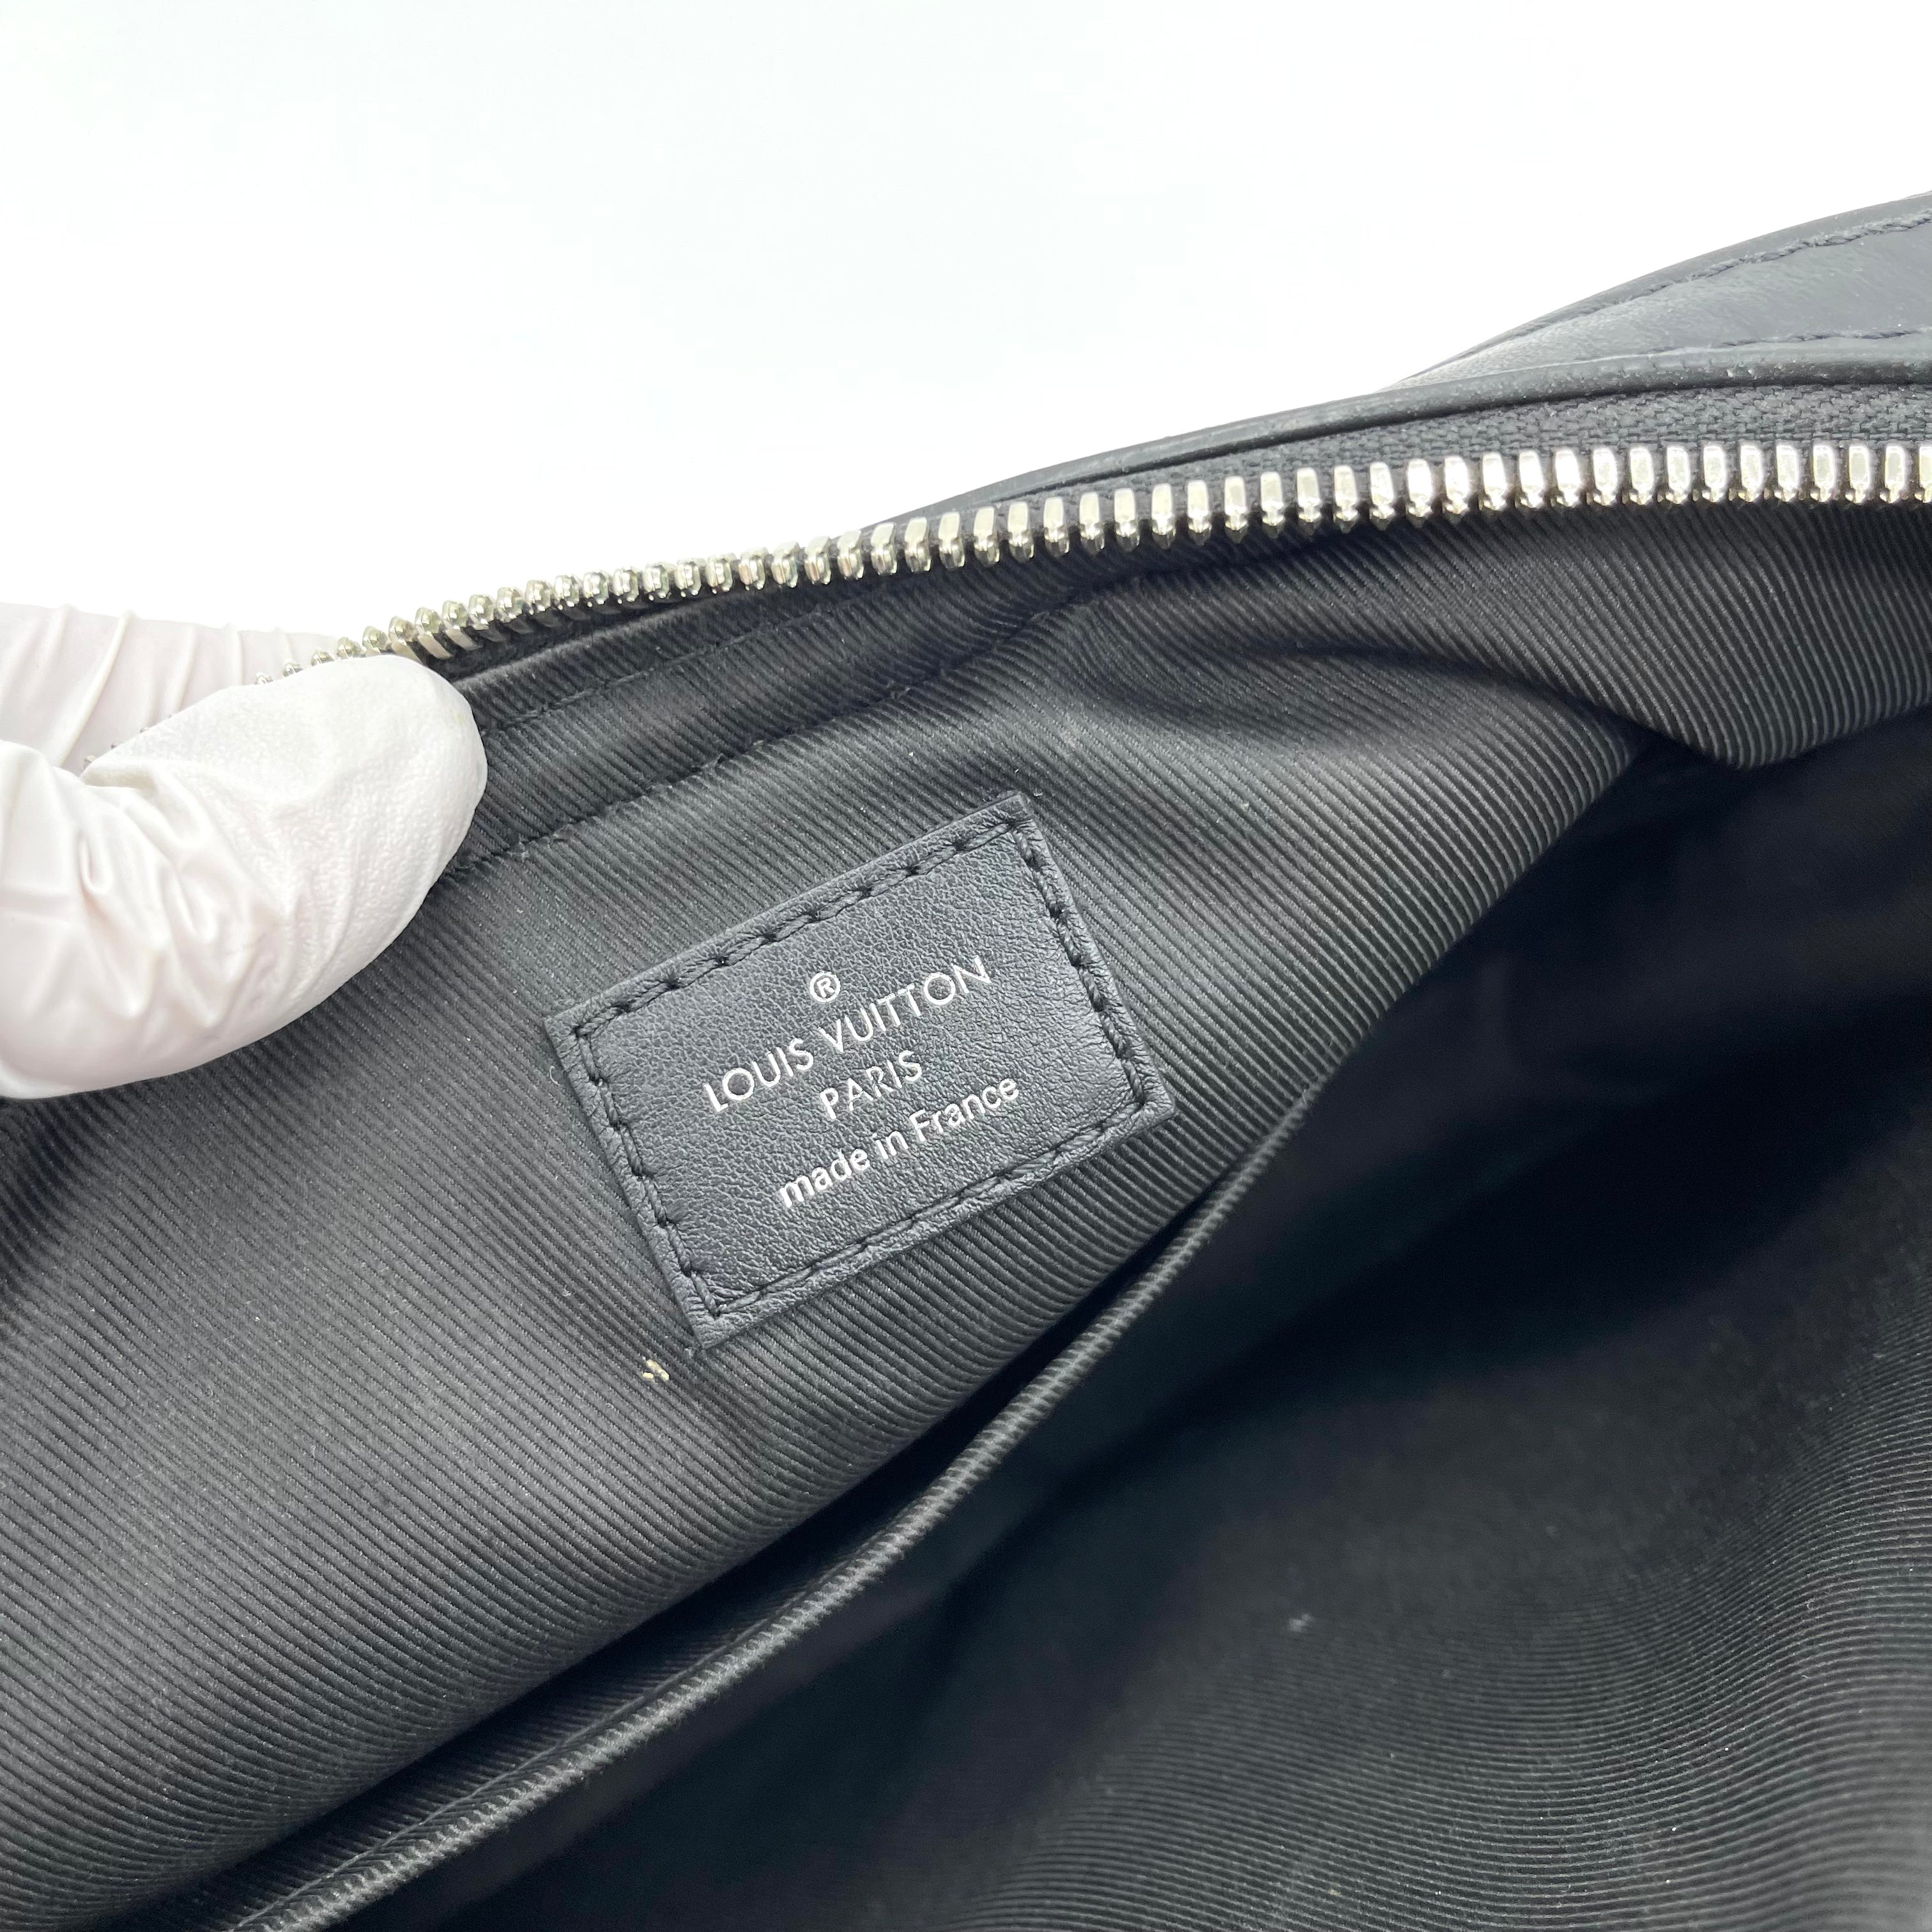 Louis Vuitton Trio Damier Graphite Messenger Bag Gray